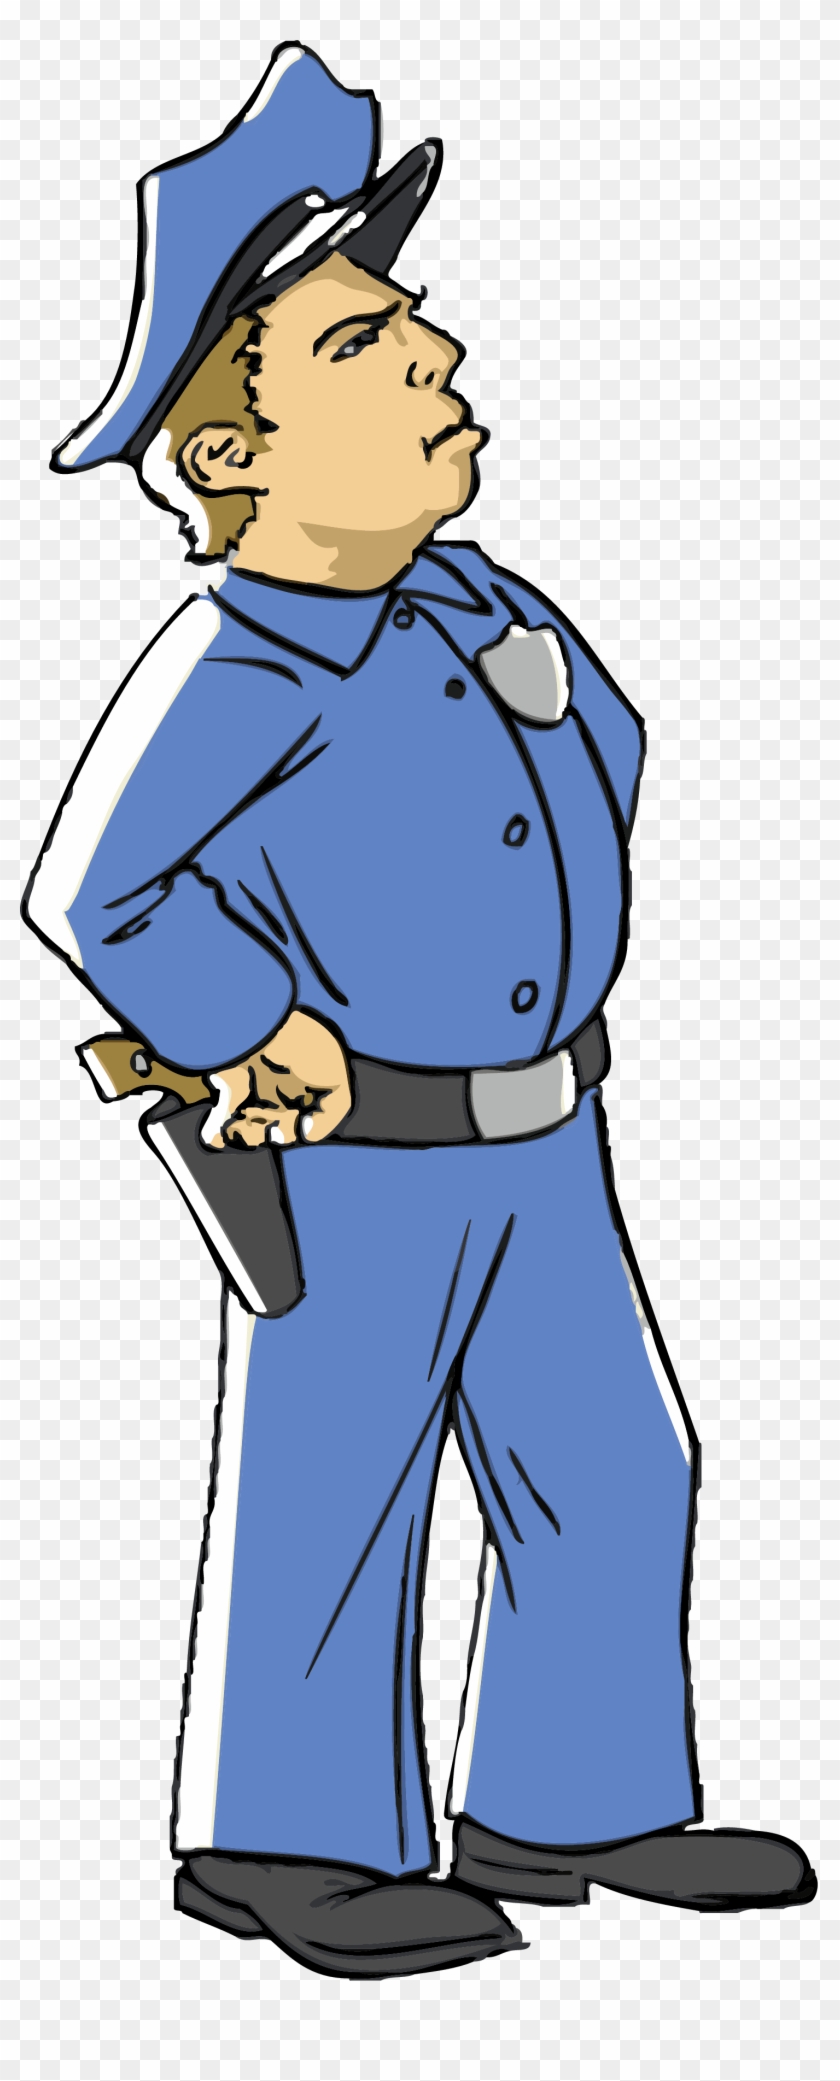 Police Officer - Police Officer Clip Art #522916